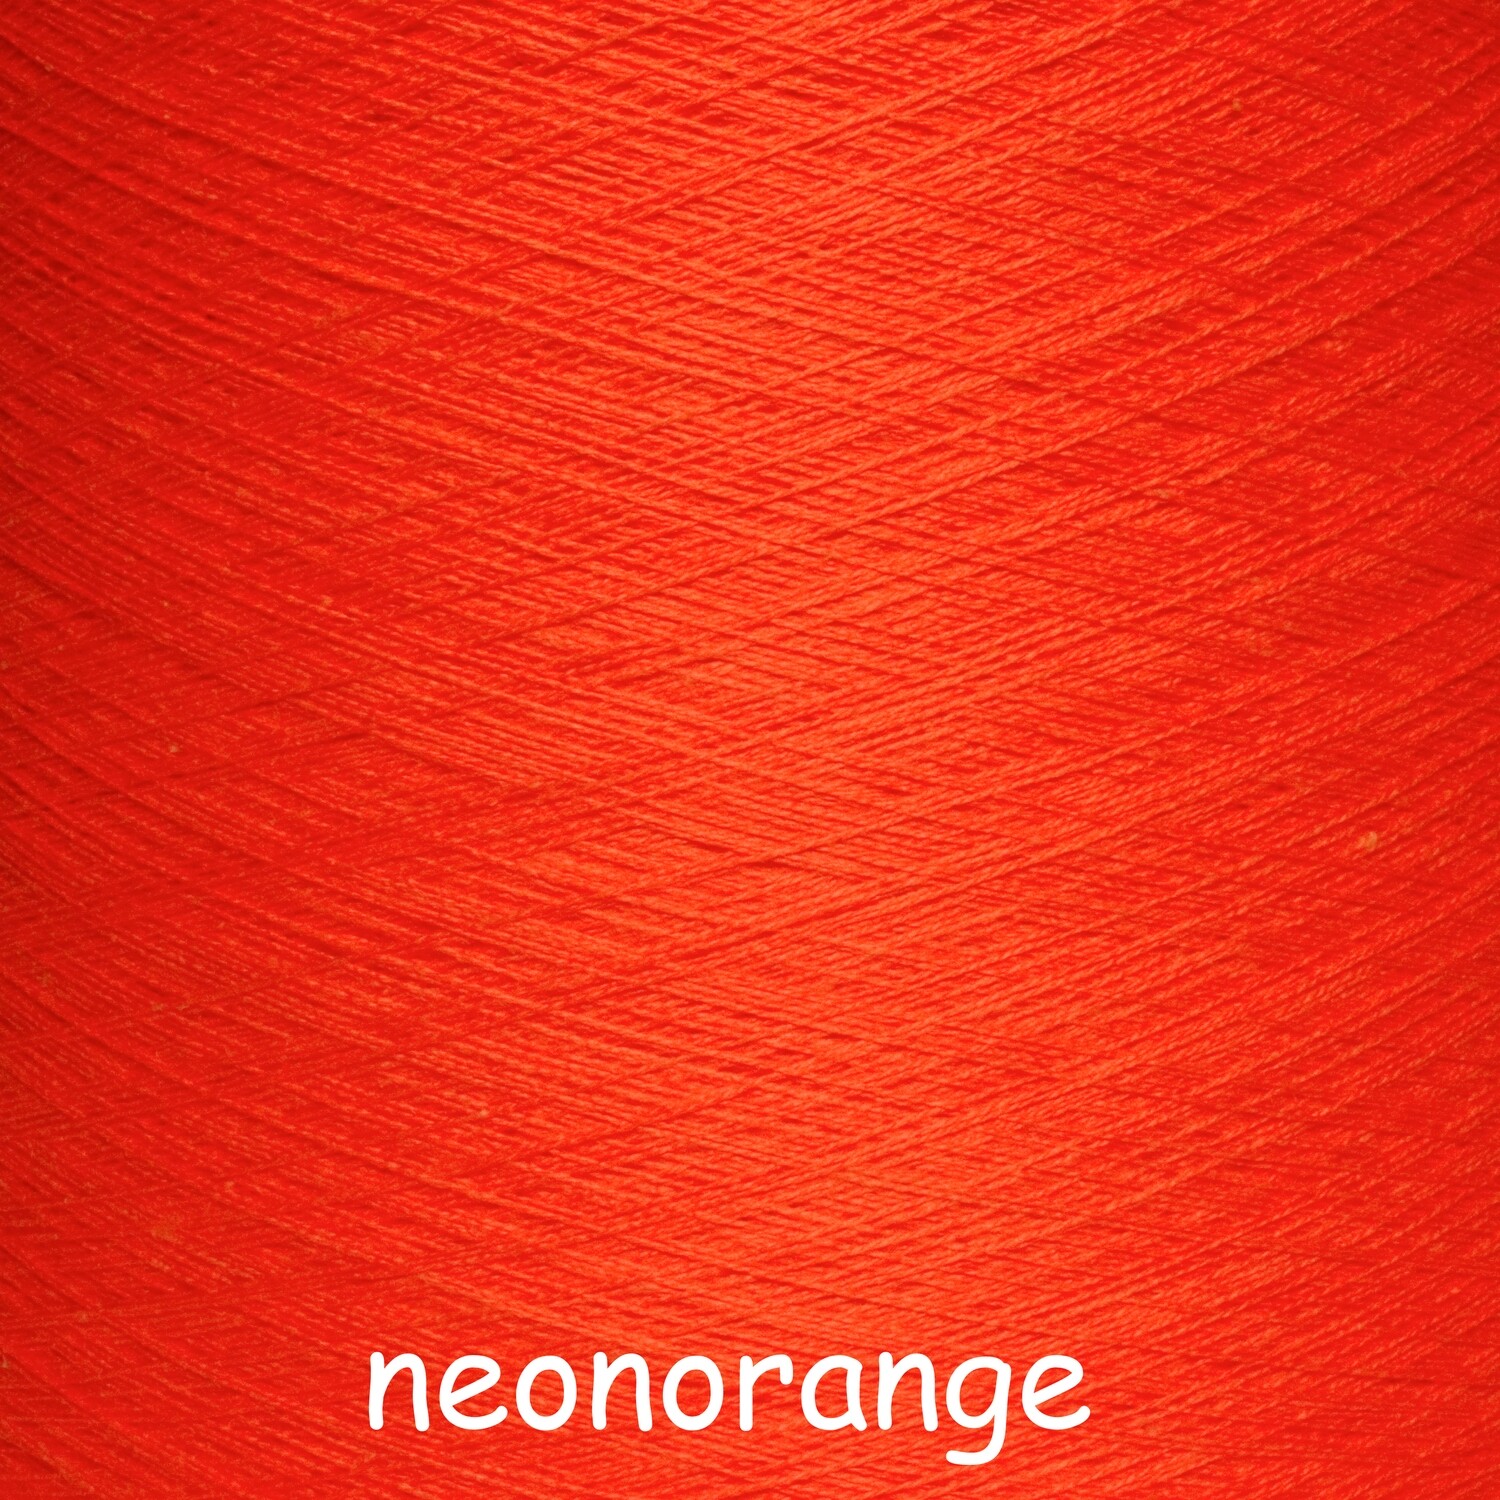 Neonorange - Sonderfarbe